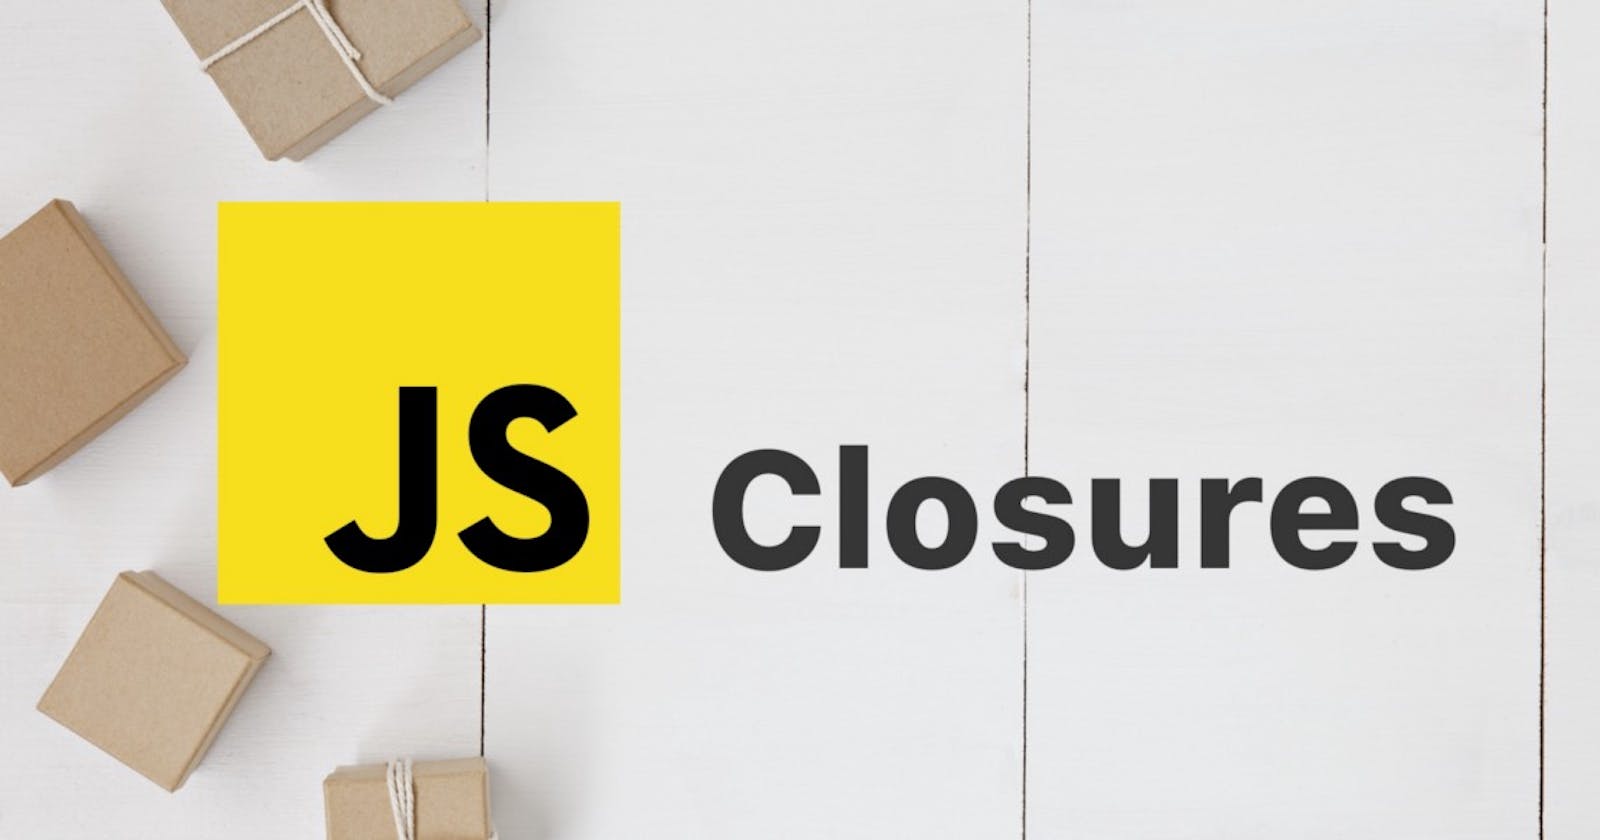 Closures in JS